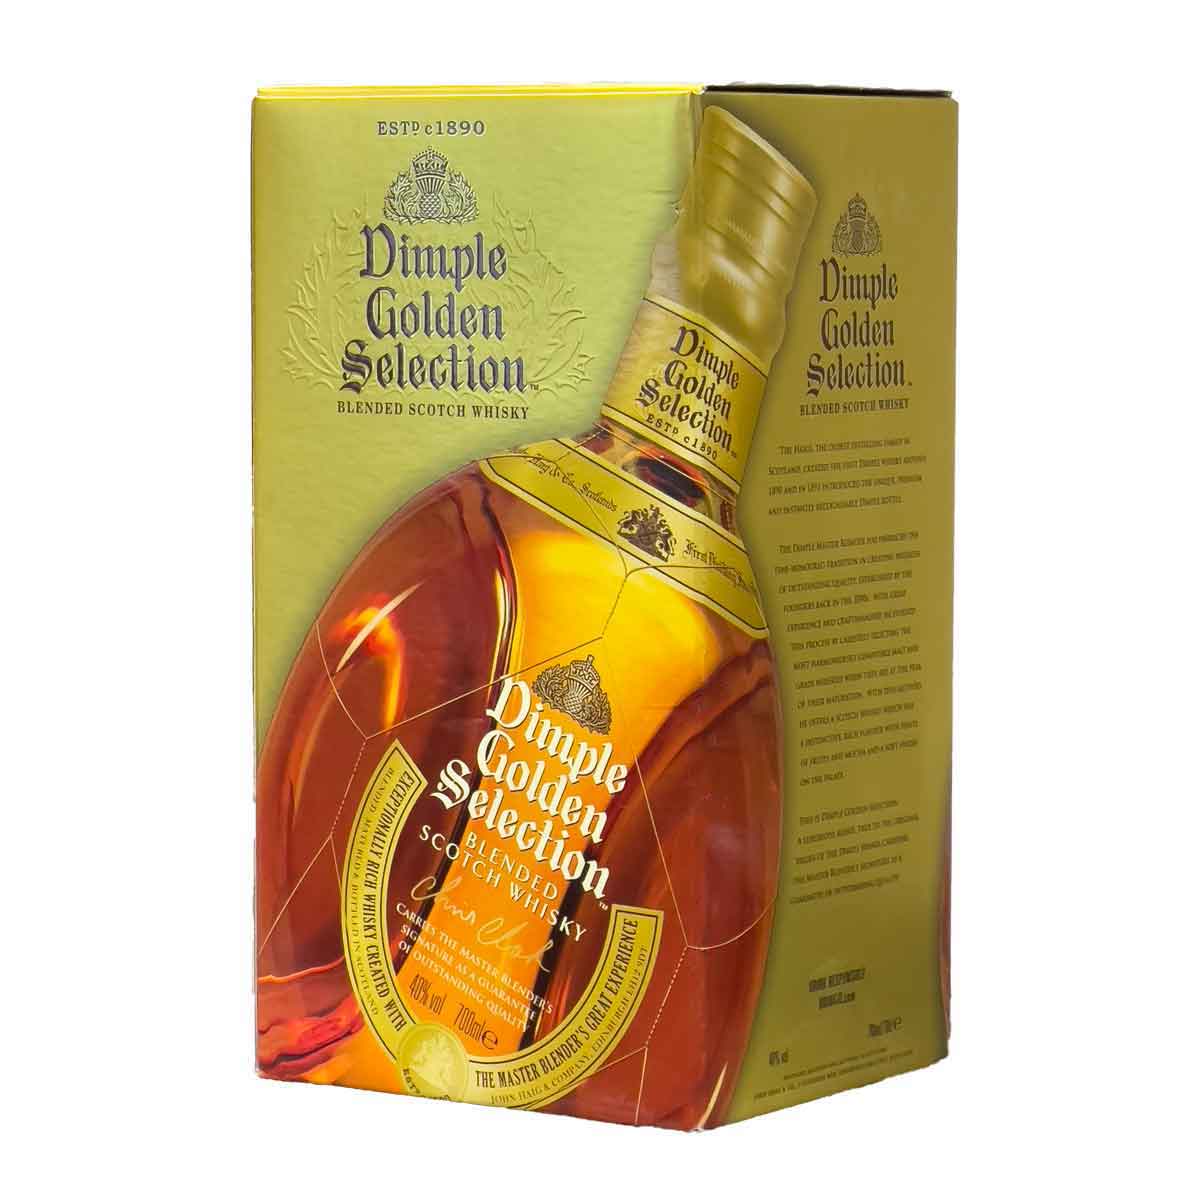 Dimple Golden Selection Blended Scotch Whisky 40% (0,7l) |  Getränke-Bringdienst Potyka